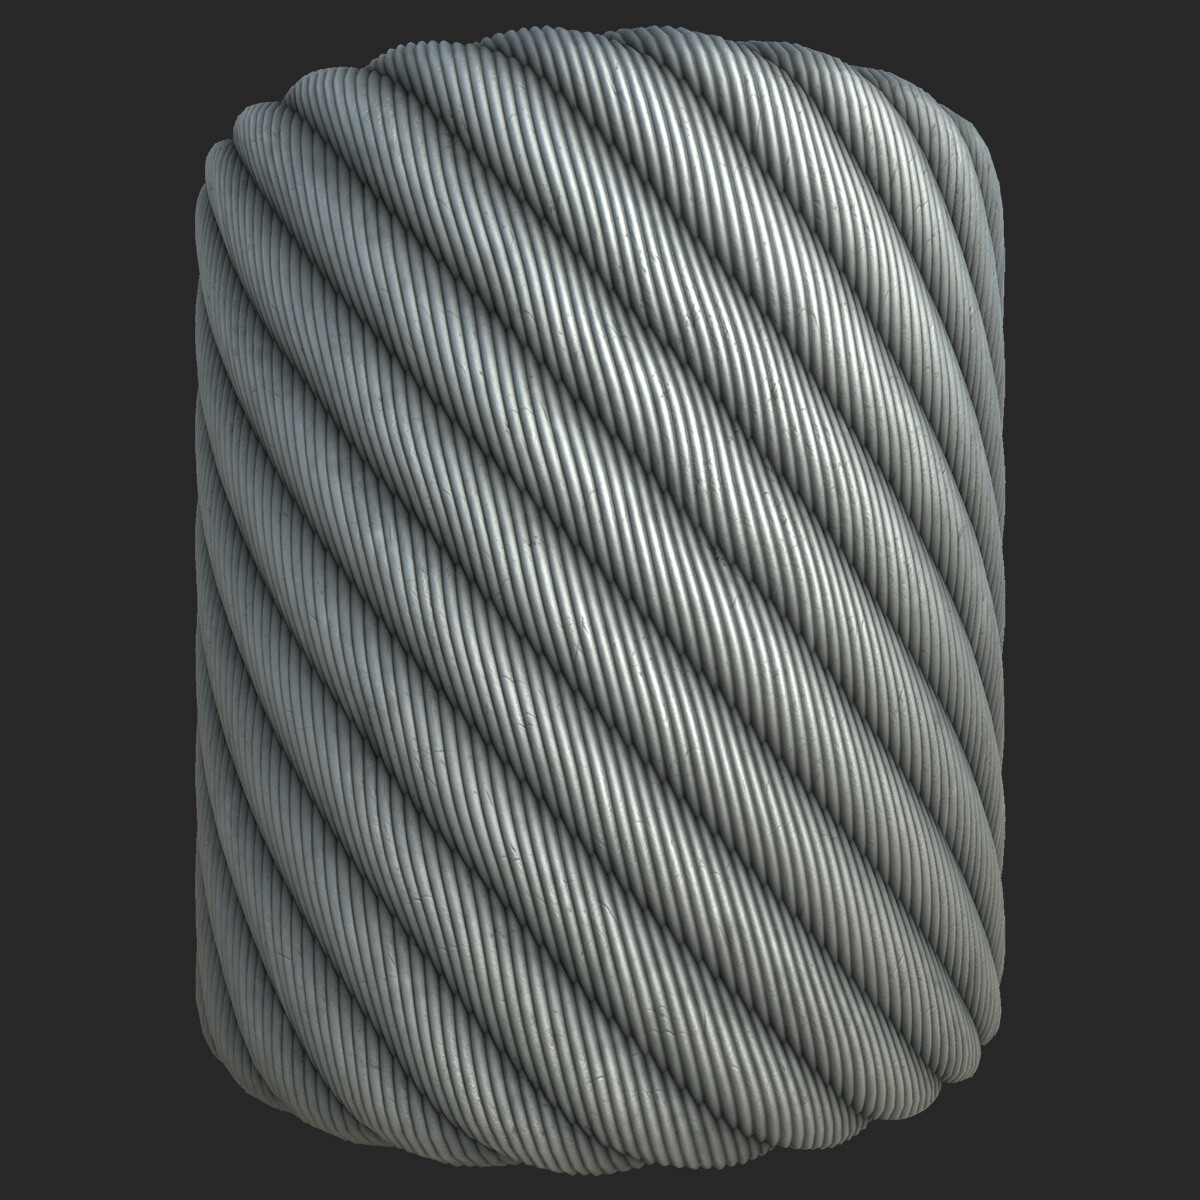 Wires (Texture)